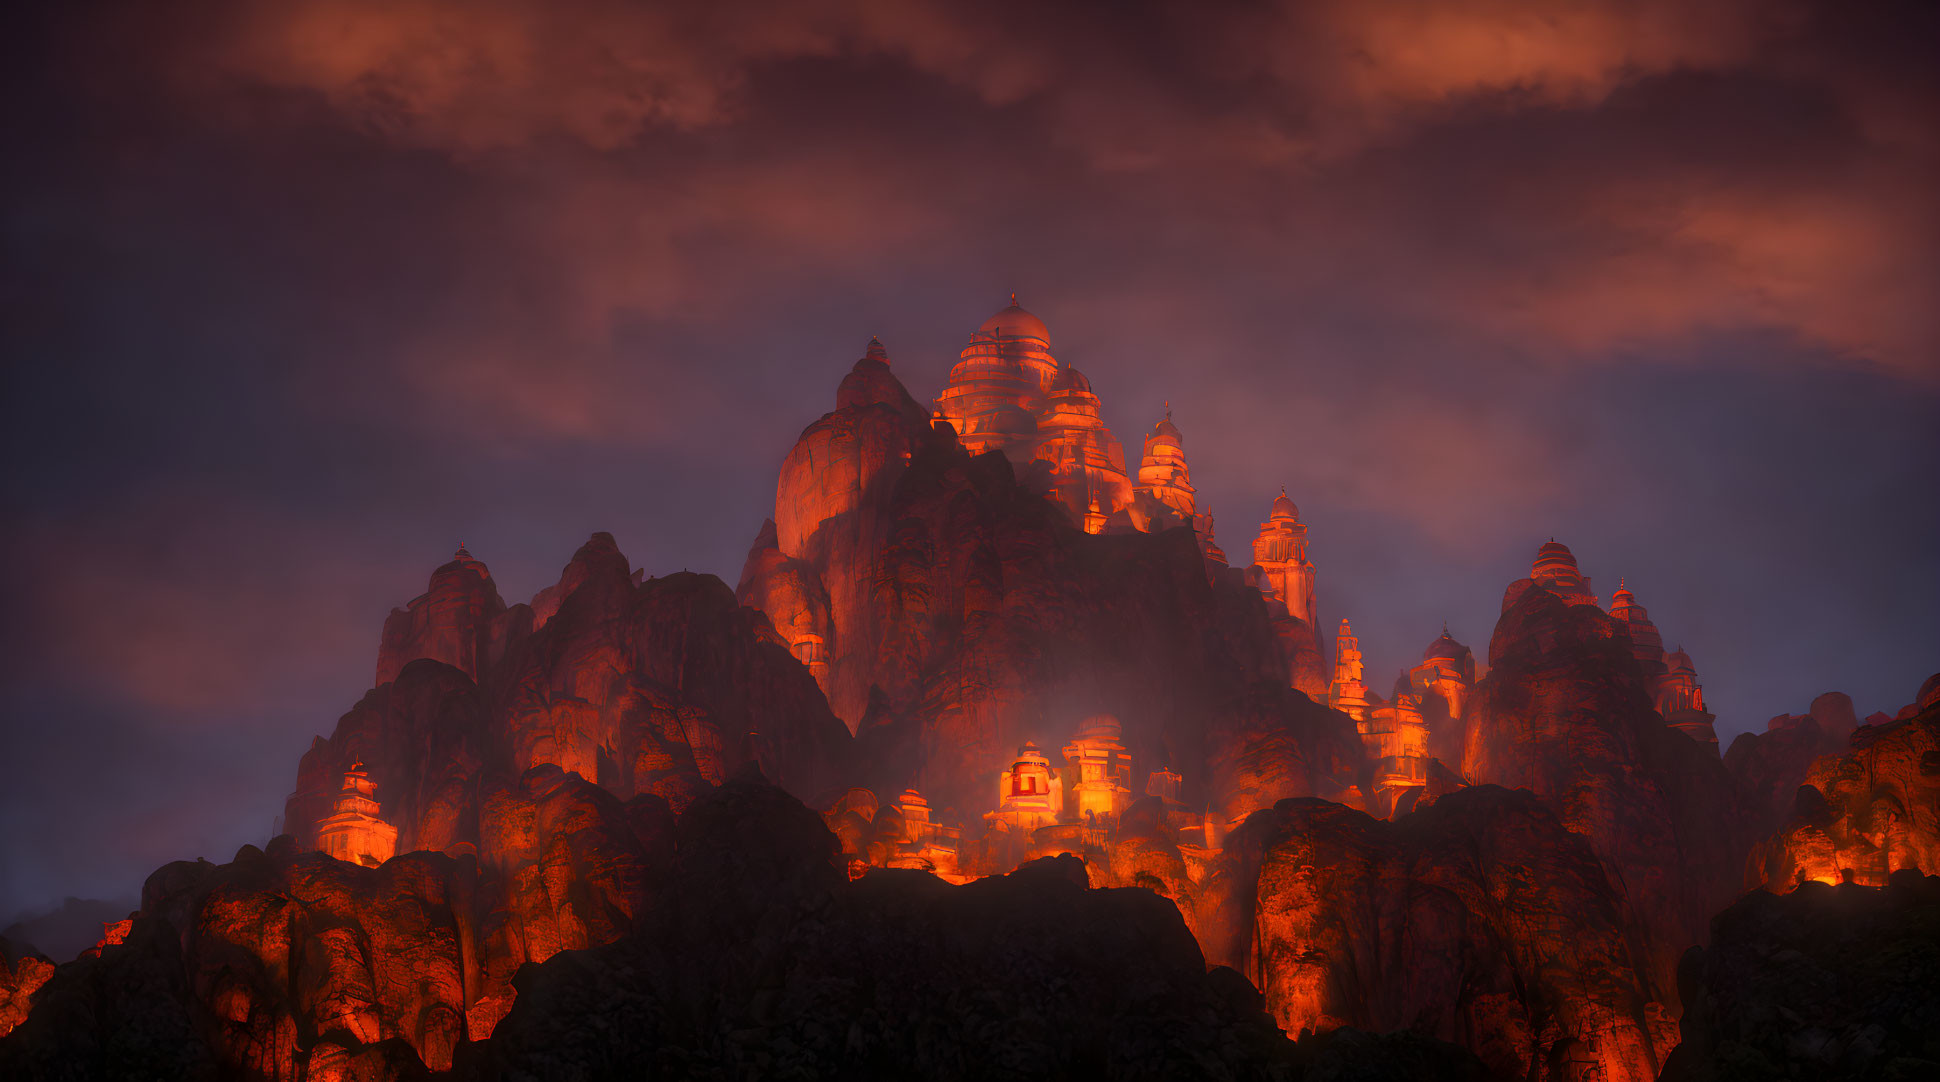 Mythical palace on dark mountains under fiery sky